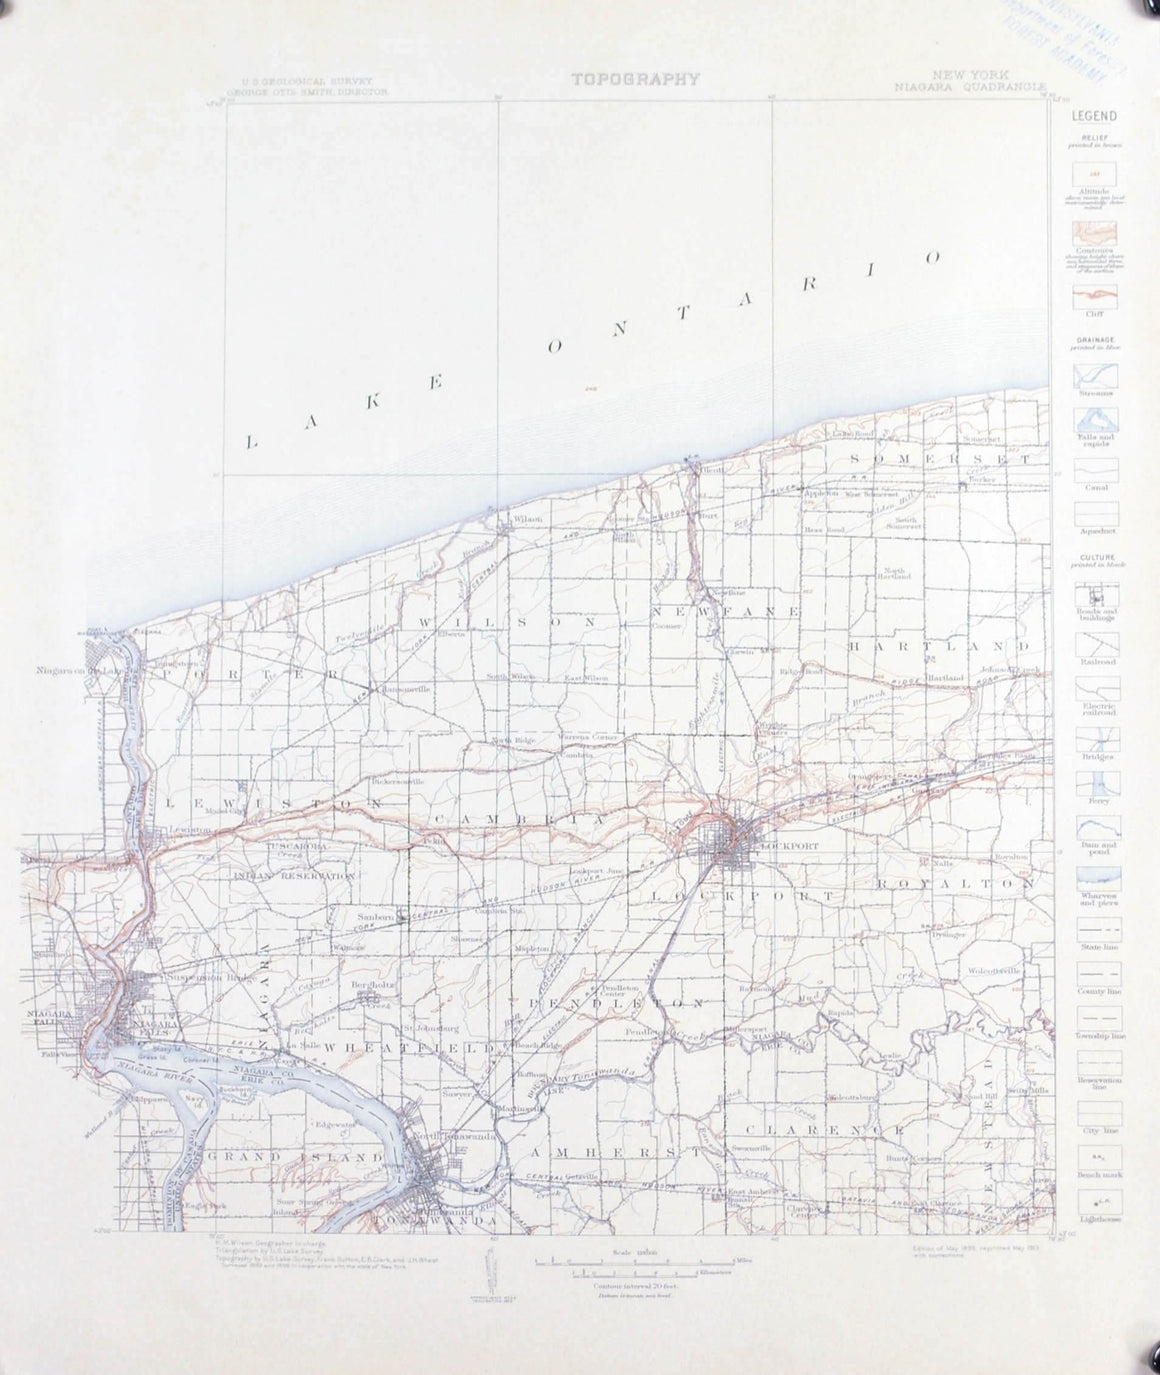 1913 U.S. Geological Survey Topographic Map of Niagara County, New York (Niagara Falls) - EM Kindle